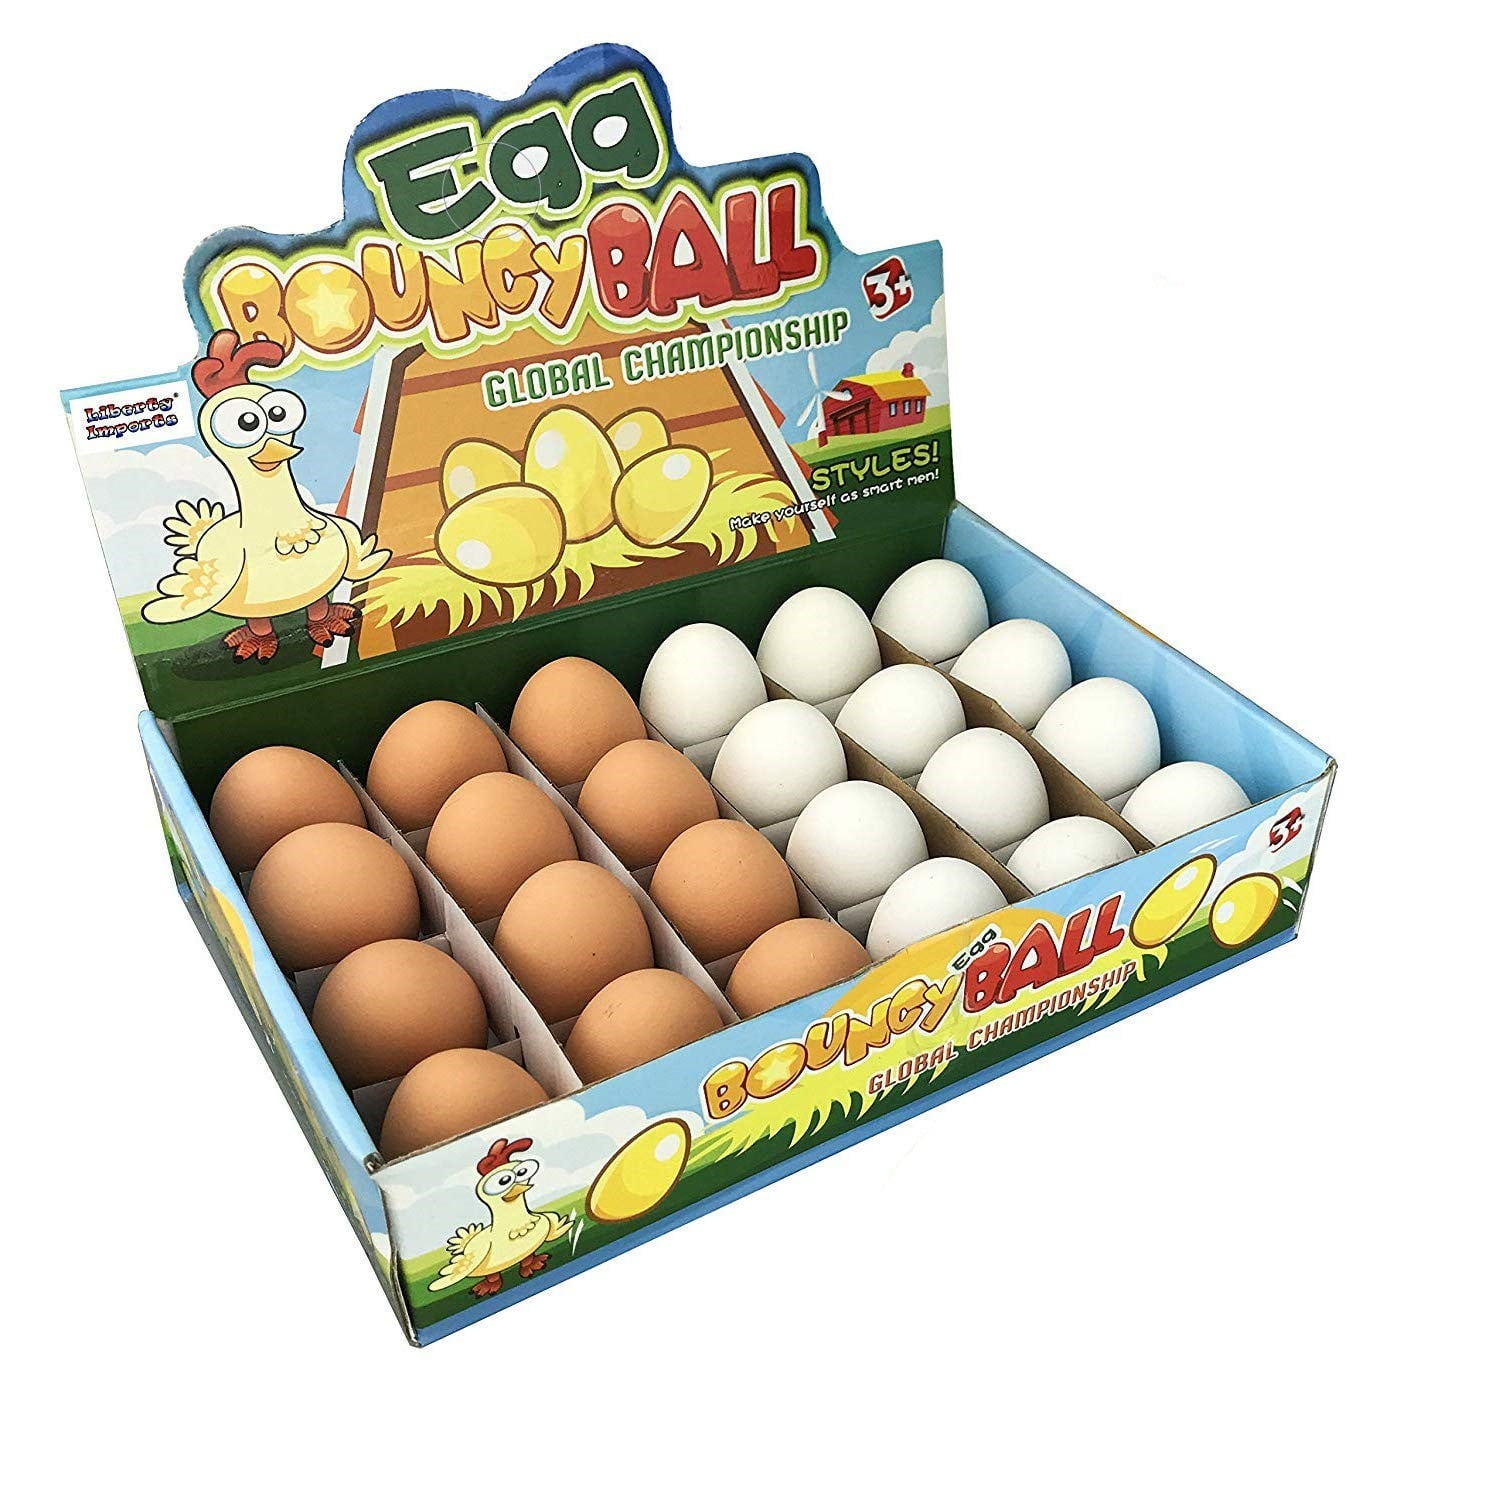 thema Gentleman vriendelijk Missend PlayWorld Realistic Fake Rubber Bouncy Eggs - 24 Eggs per Pack - Multicolor  - Walmart.com